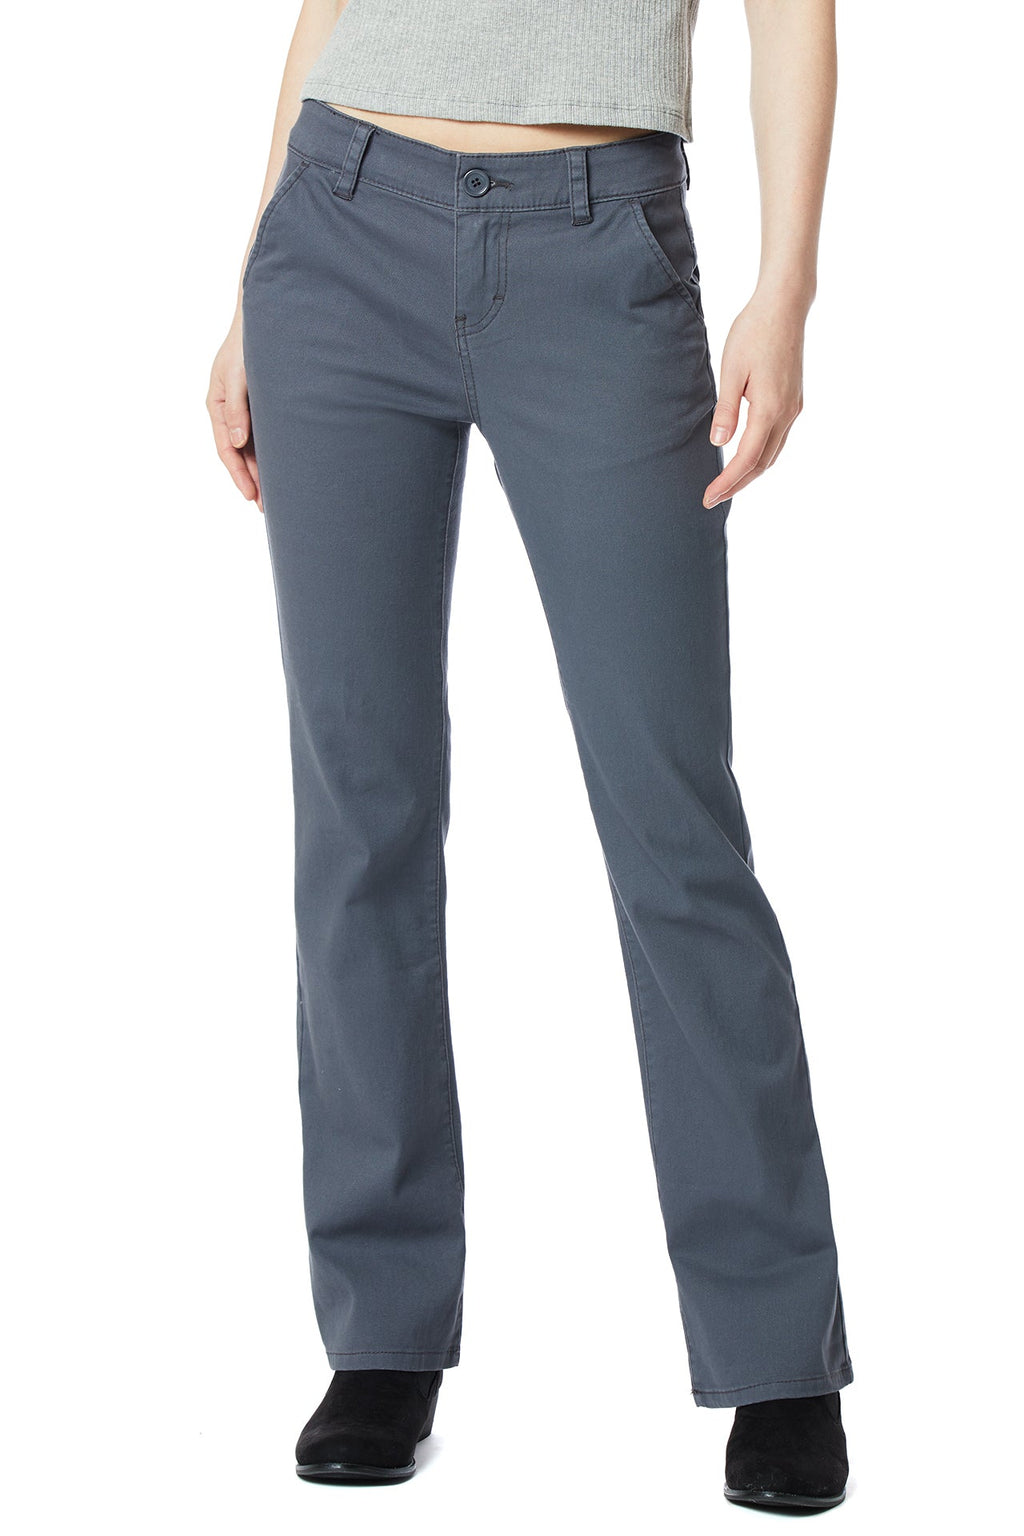 Women’s Uniform Pants - Comfortable Work Pants for Women